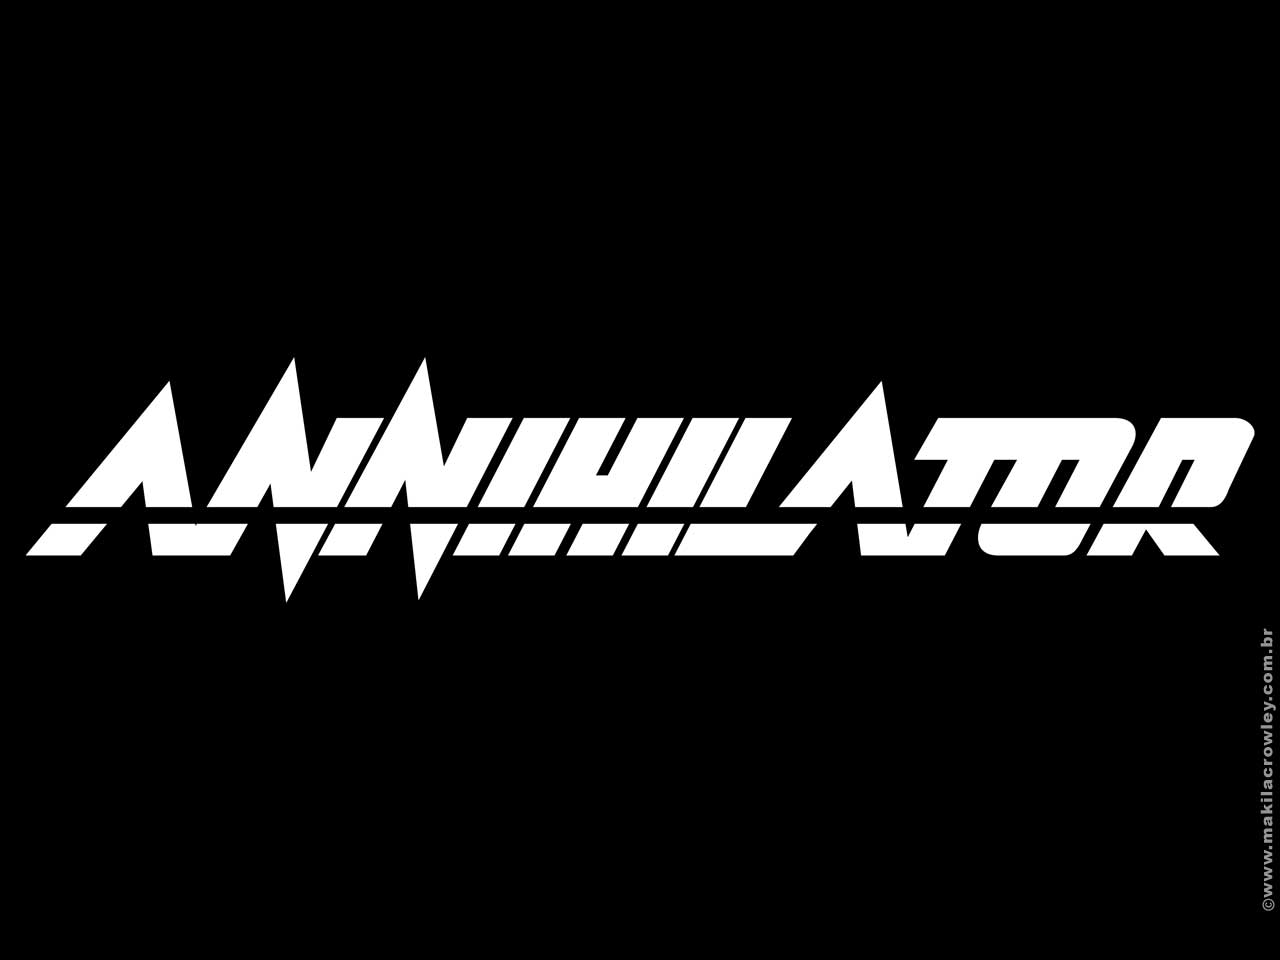 Annihilator #logo - Annihilator Vector, Transparent background PNG HD thumbnail